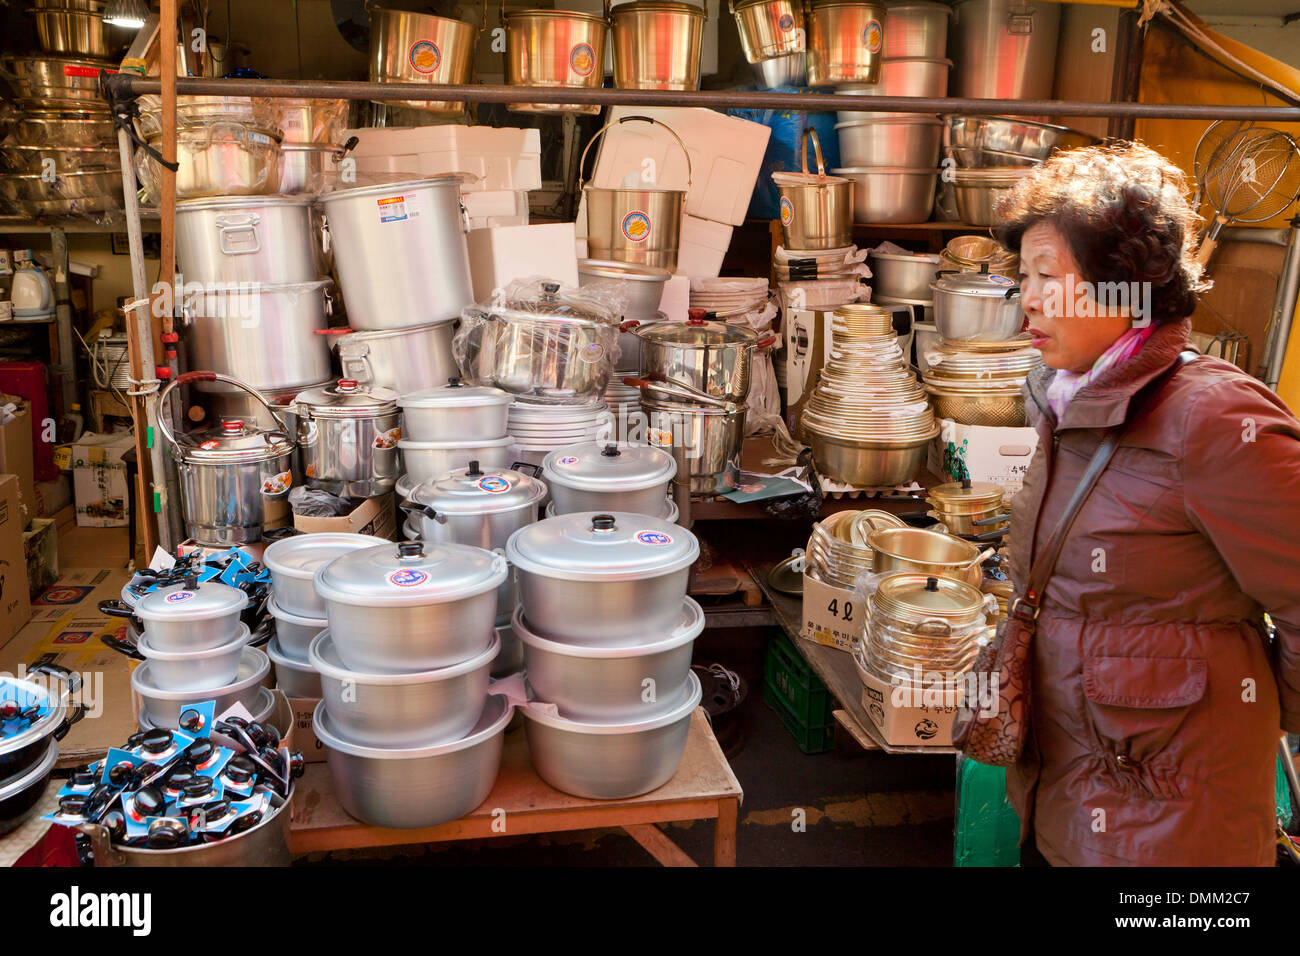 https://c8.alamy.com/comp/DMM2C7/cookware-store-at-jagalchi-shijang-traditional-outdoor-market-busan-DMM2C7.jpg